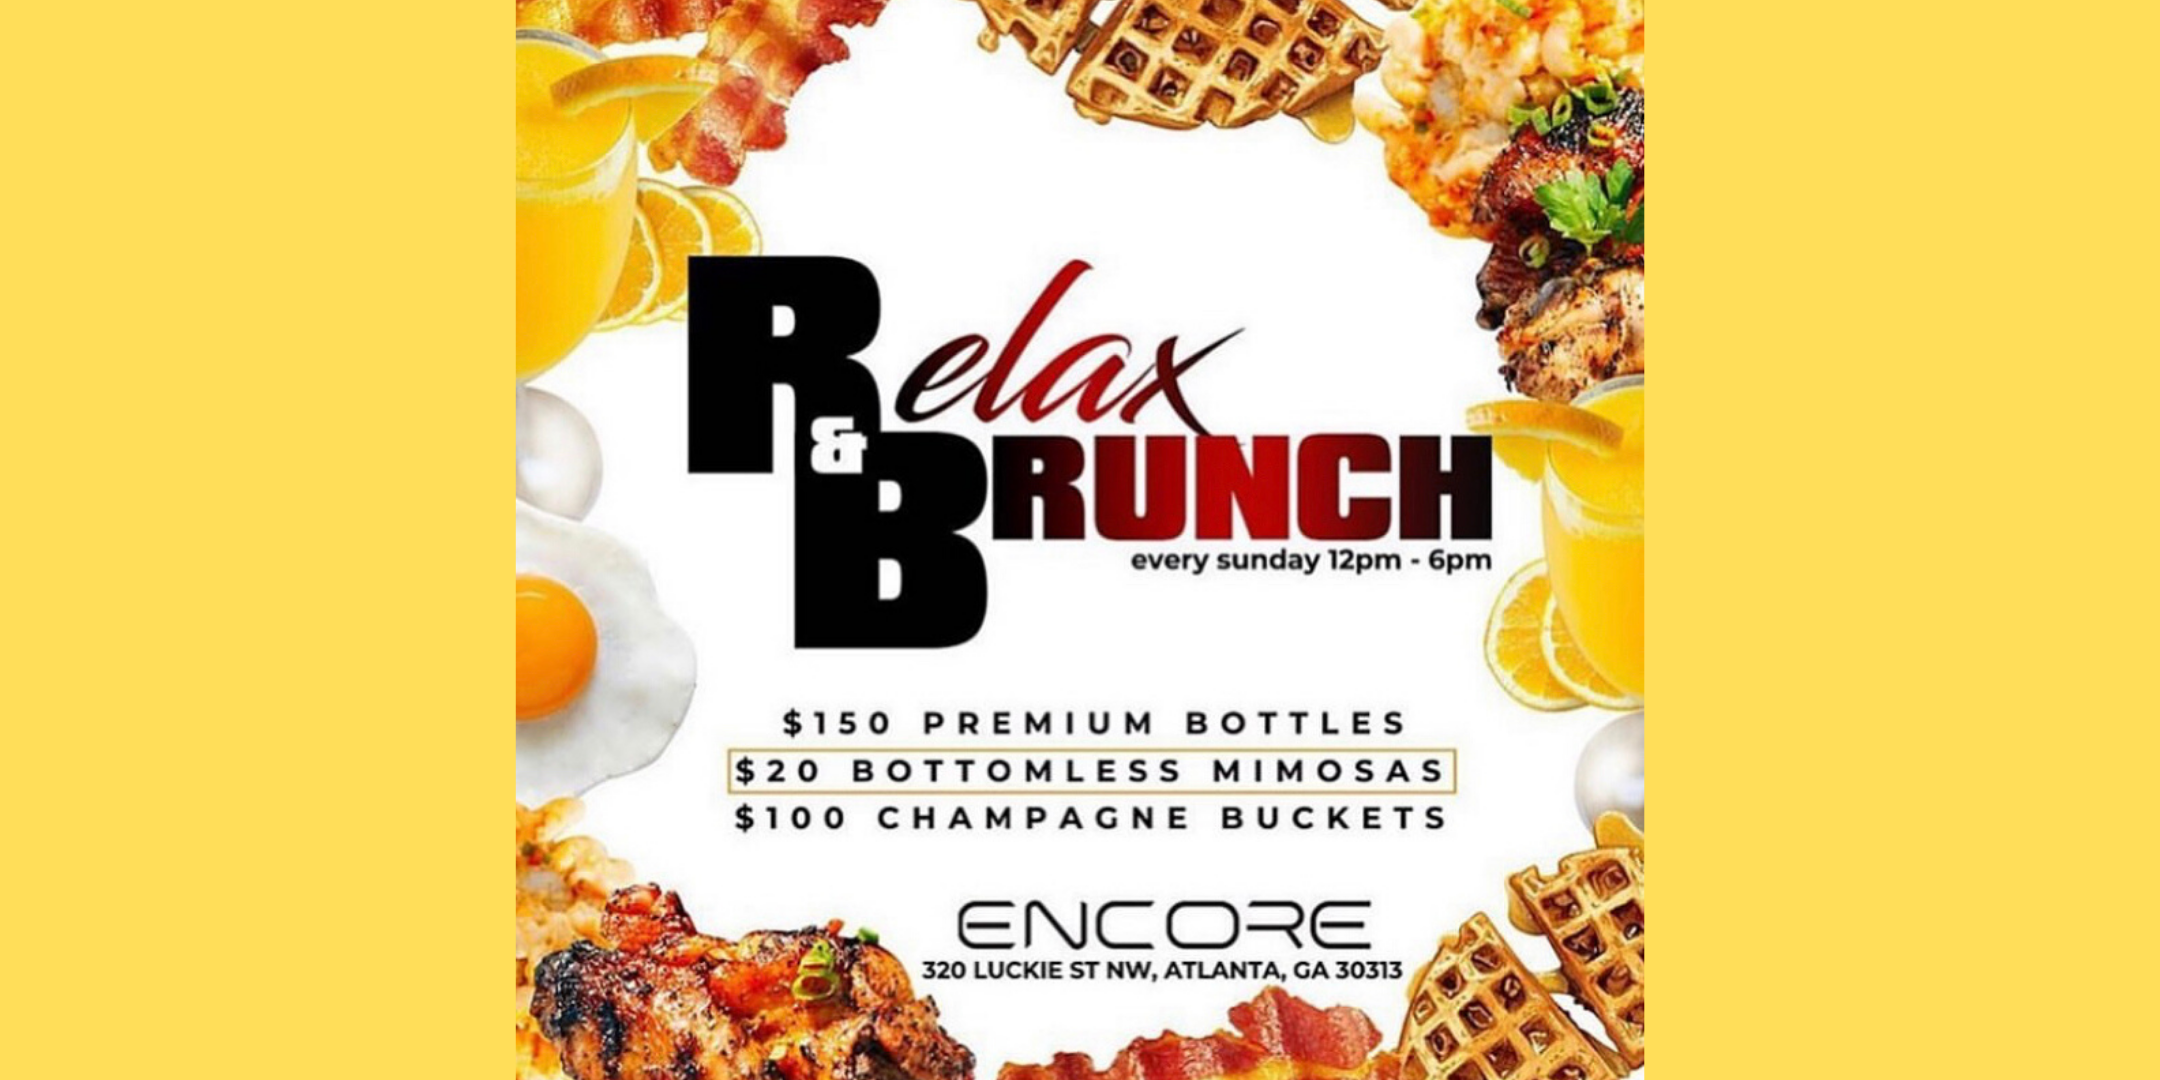 Relax & Brunch Sundays @Encoreatl featuring $20 Bottomless Mimosas!